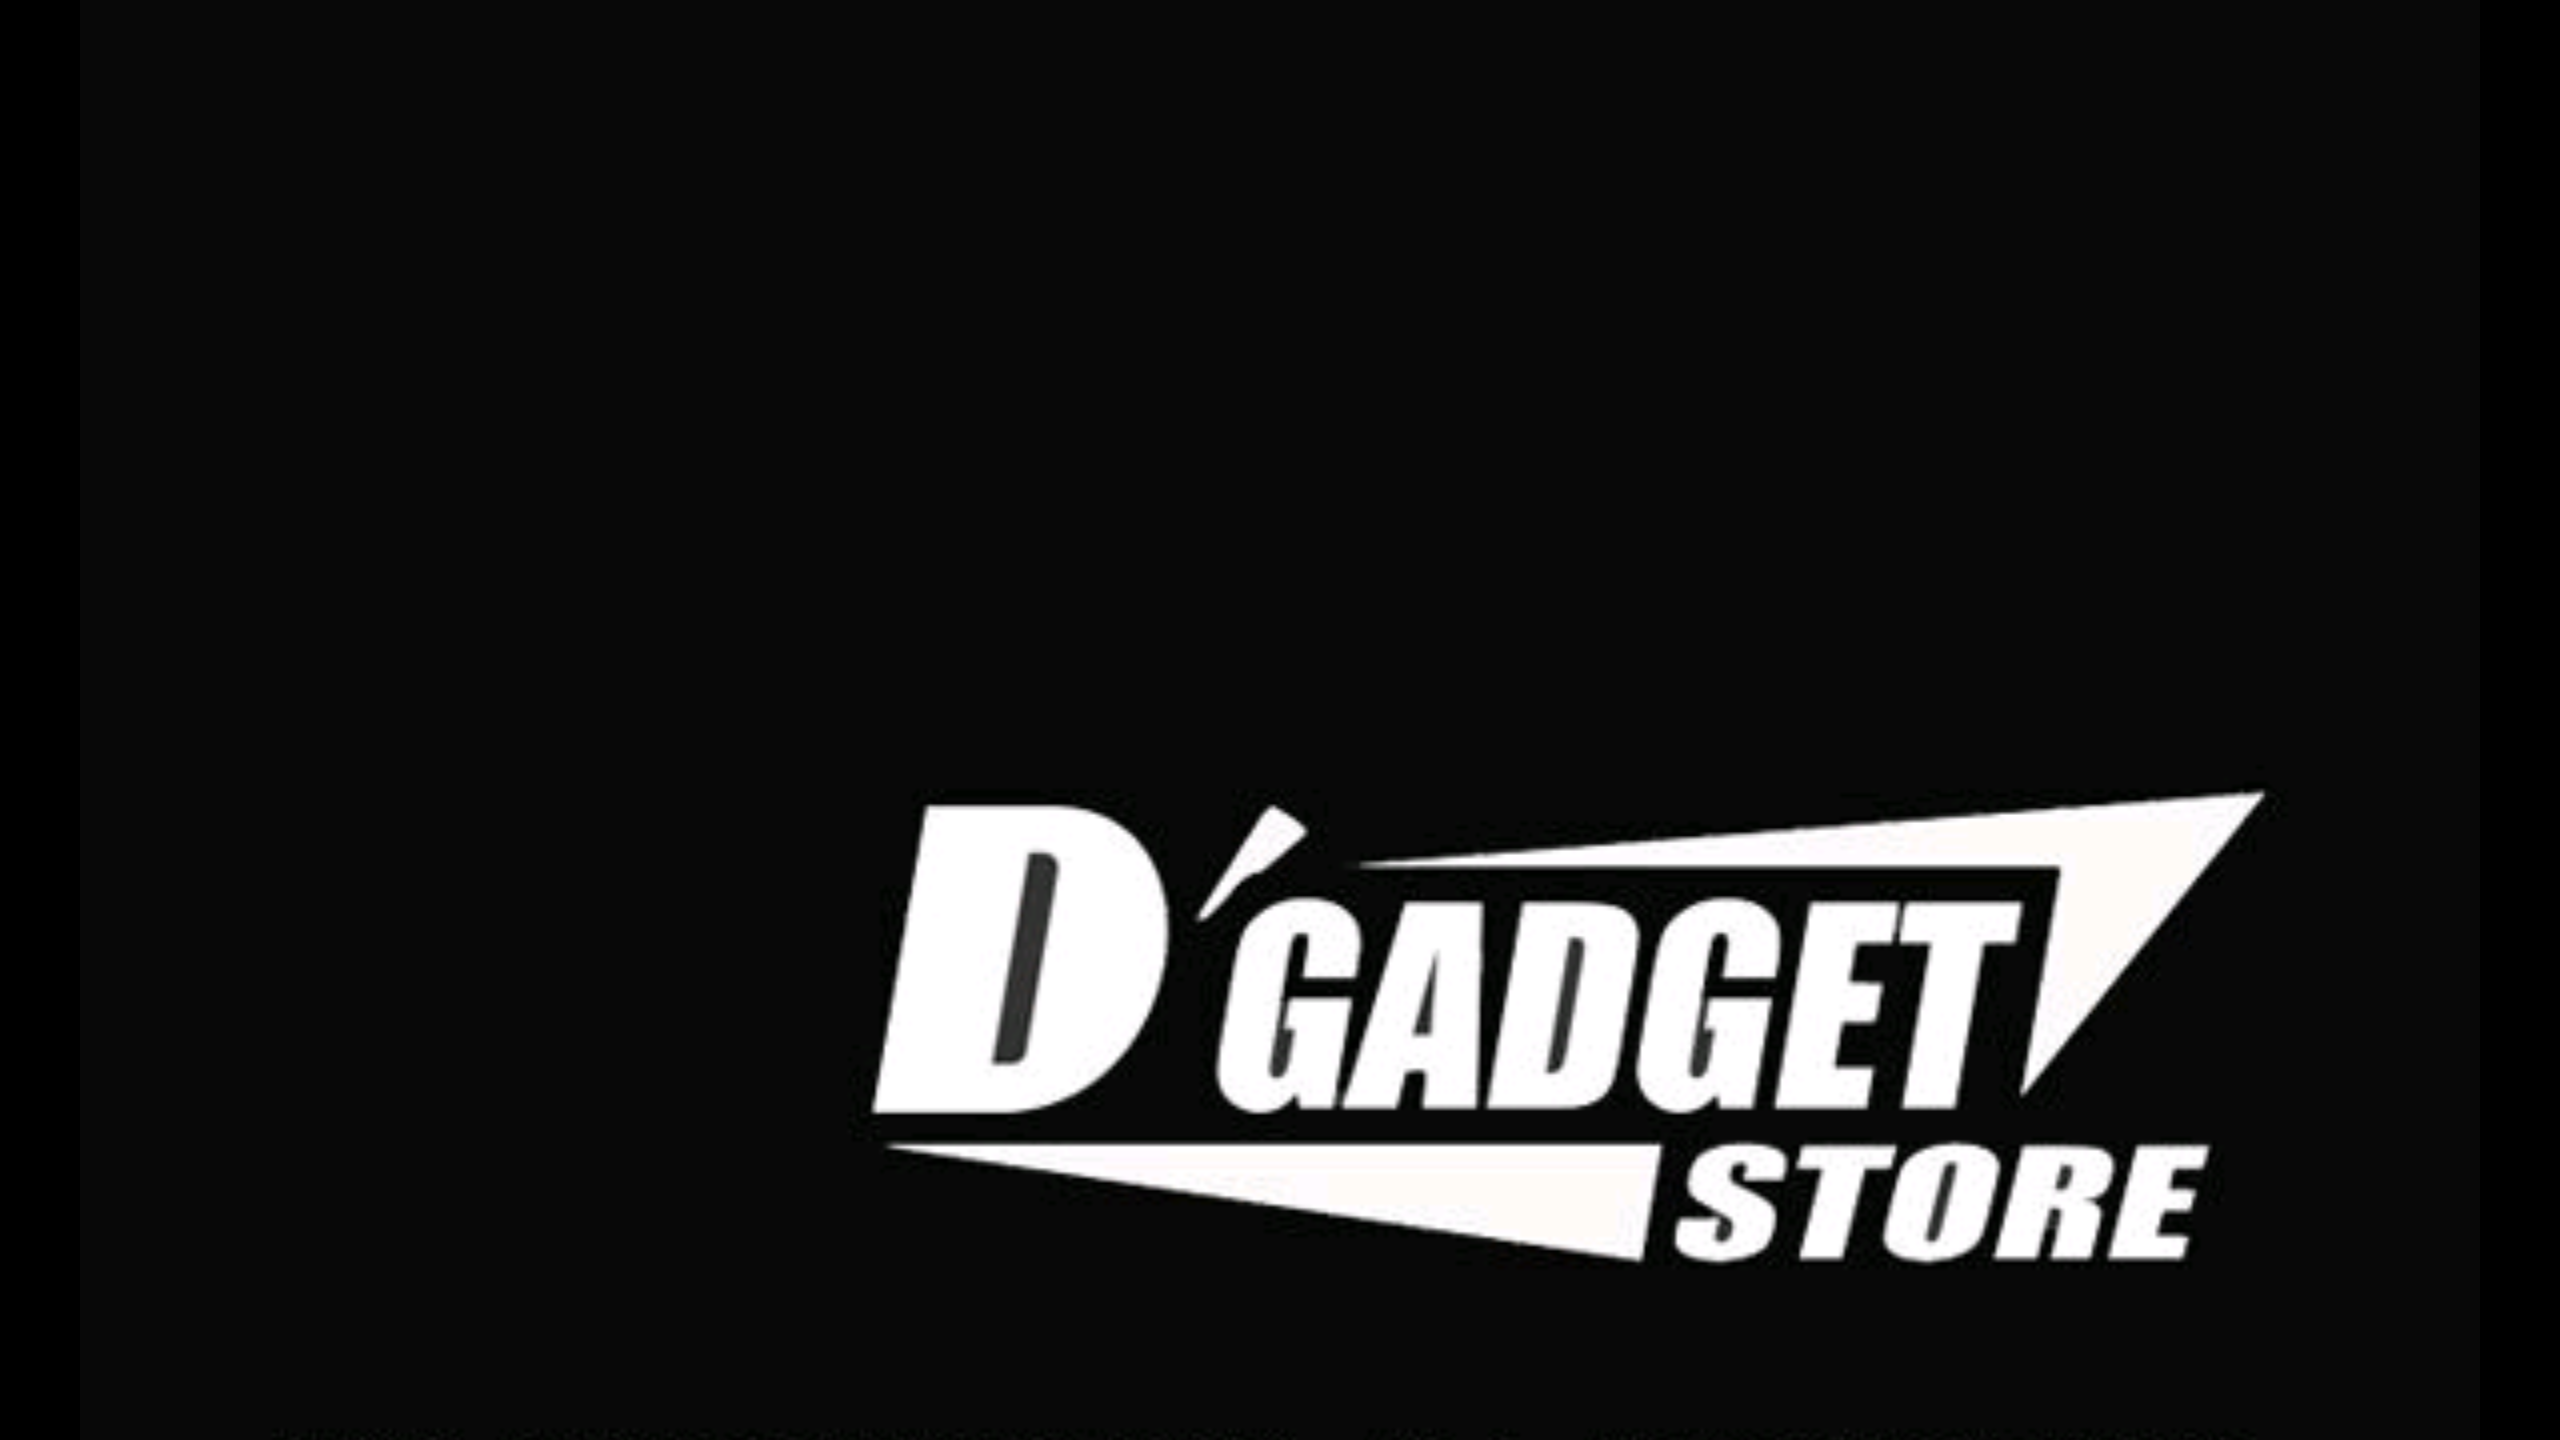 DGadget Official Store